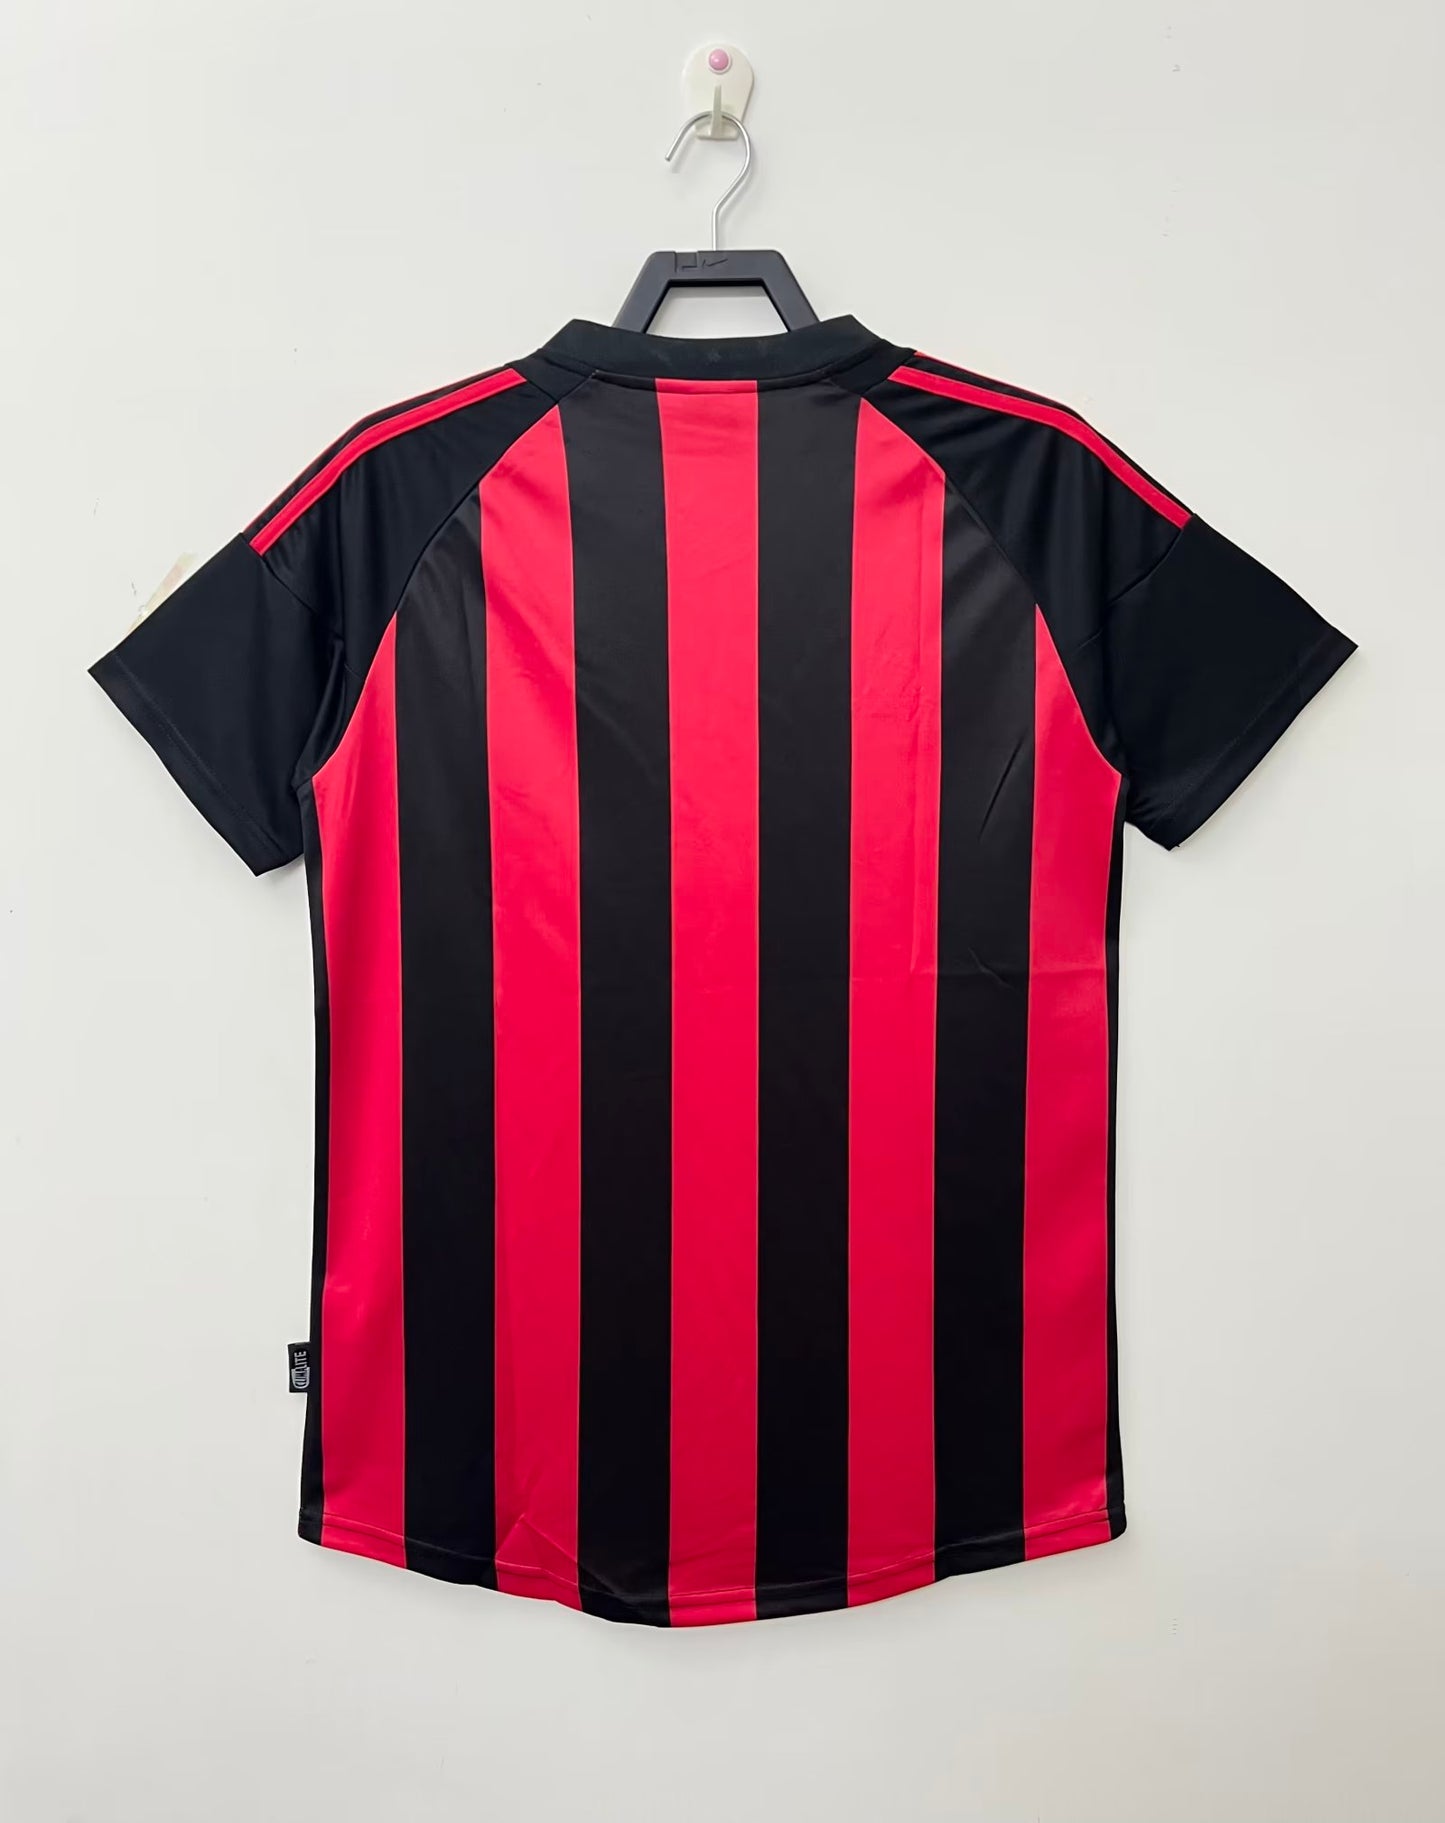 AC Milan 02-03 Home Shirt rear